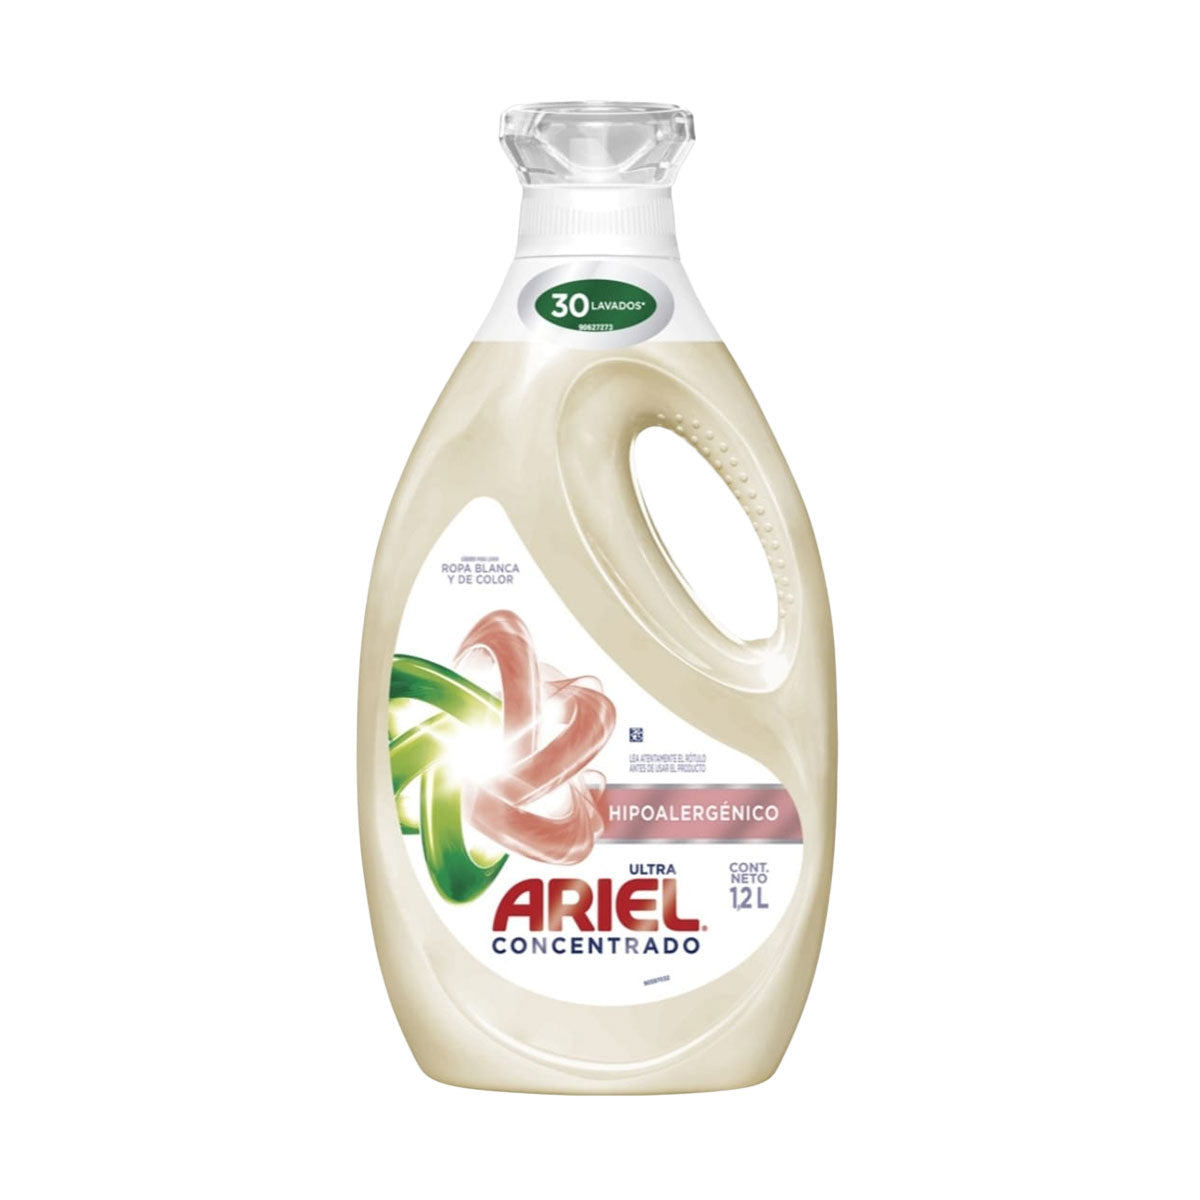 Detergente líquido Ariel Hipoalargénico 1,2 lts